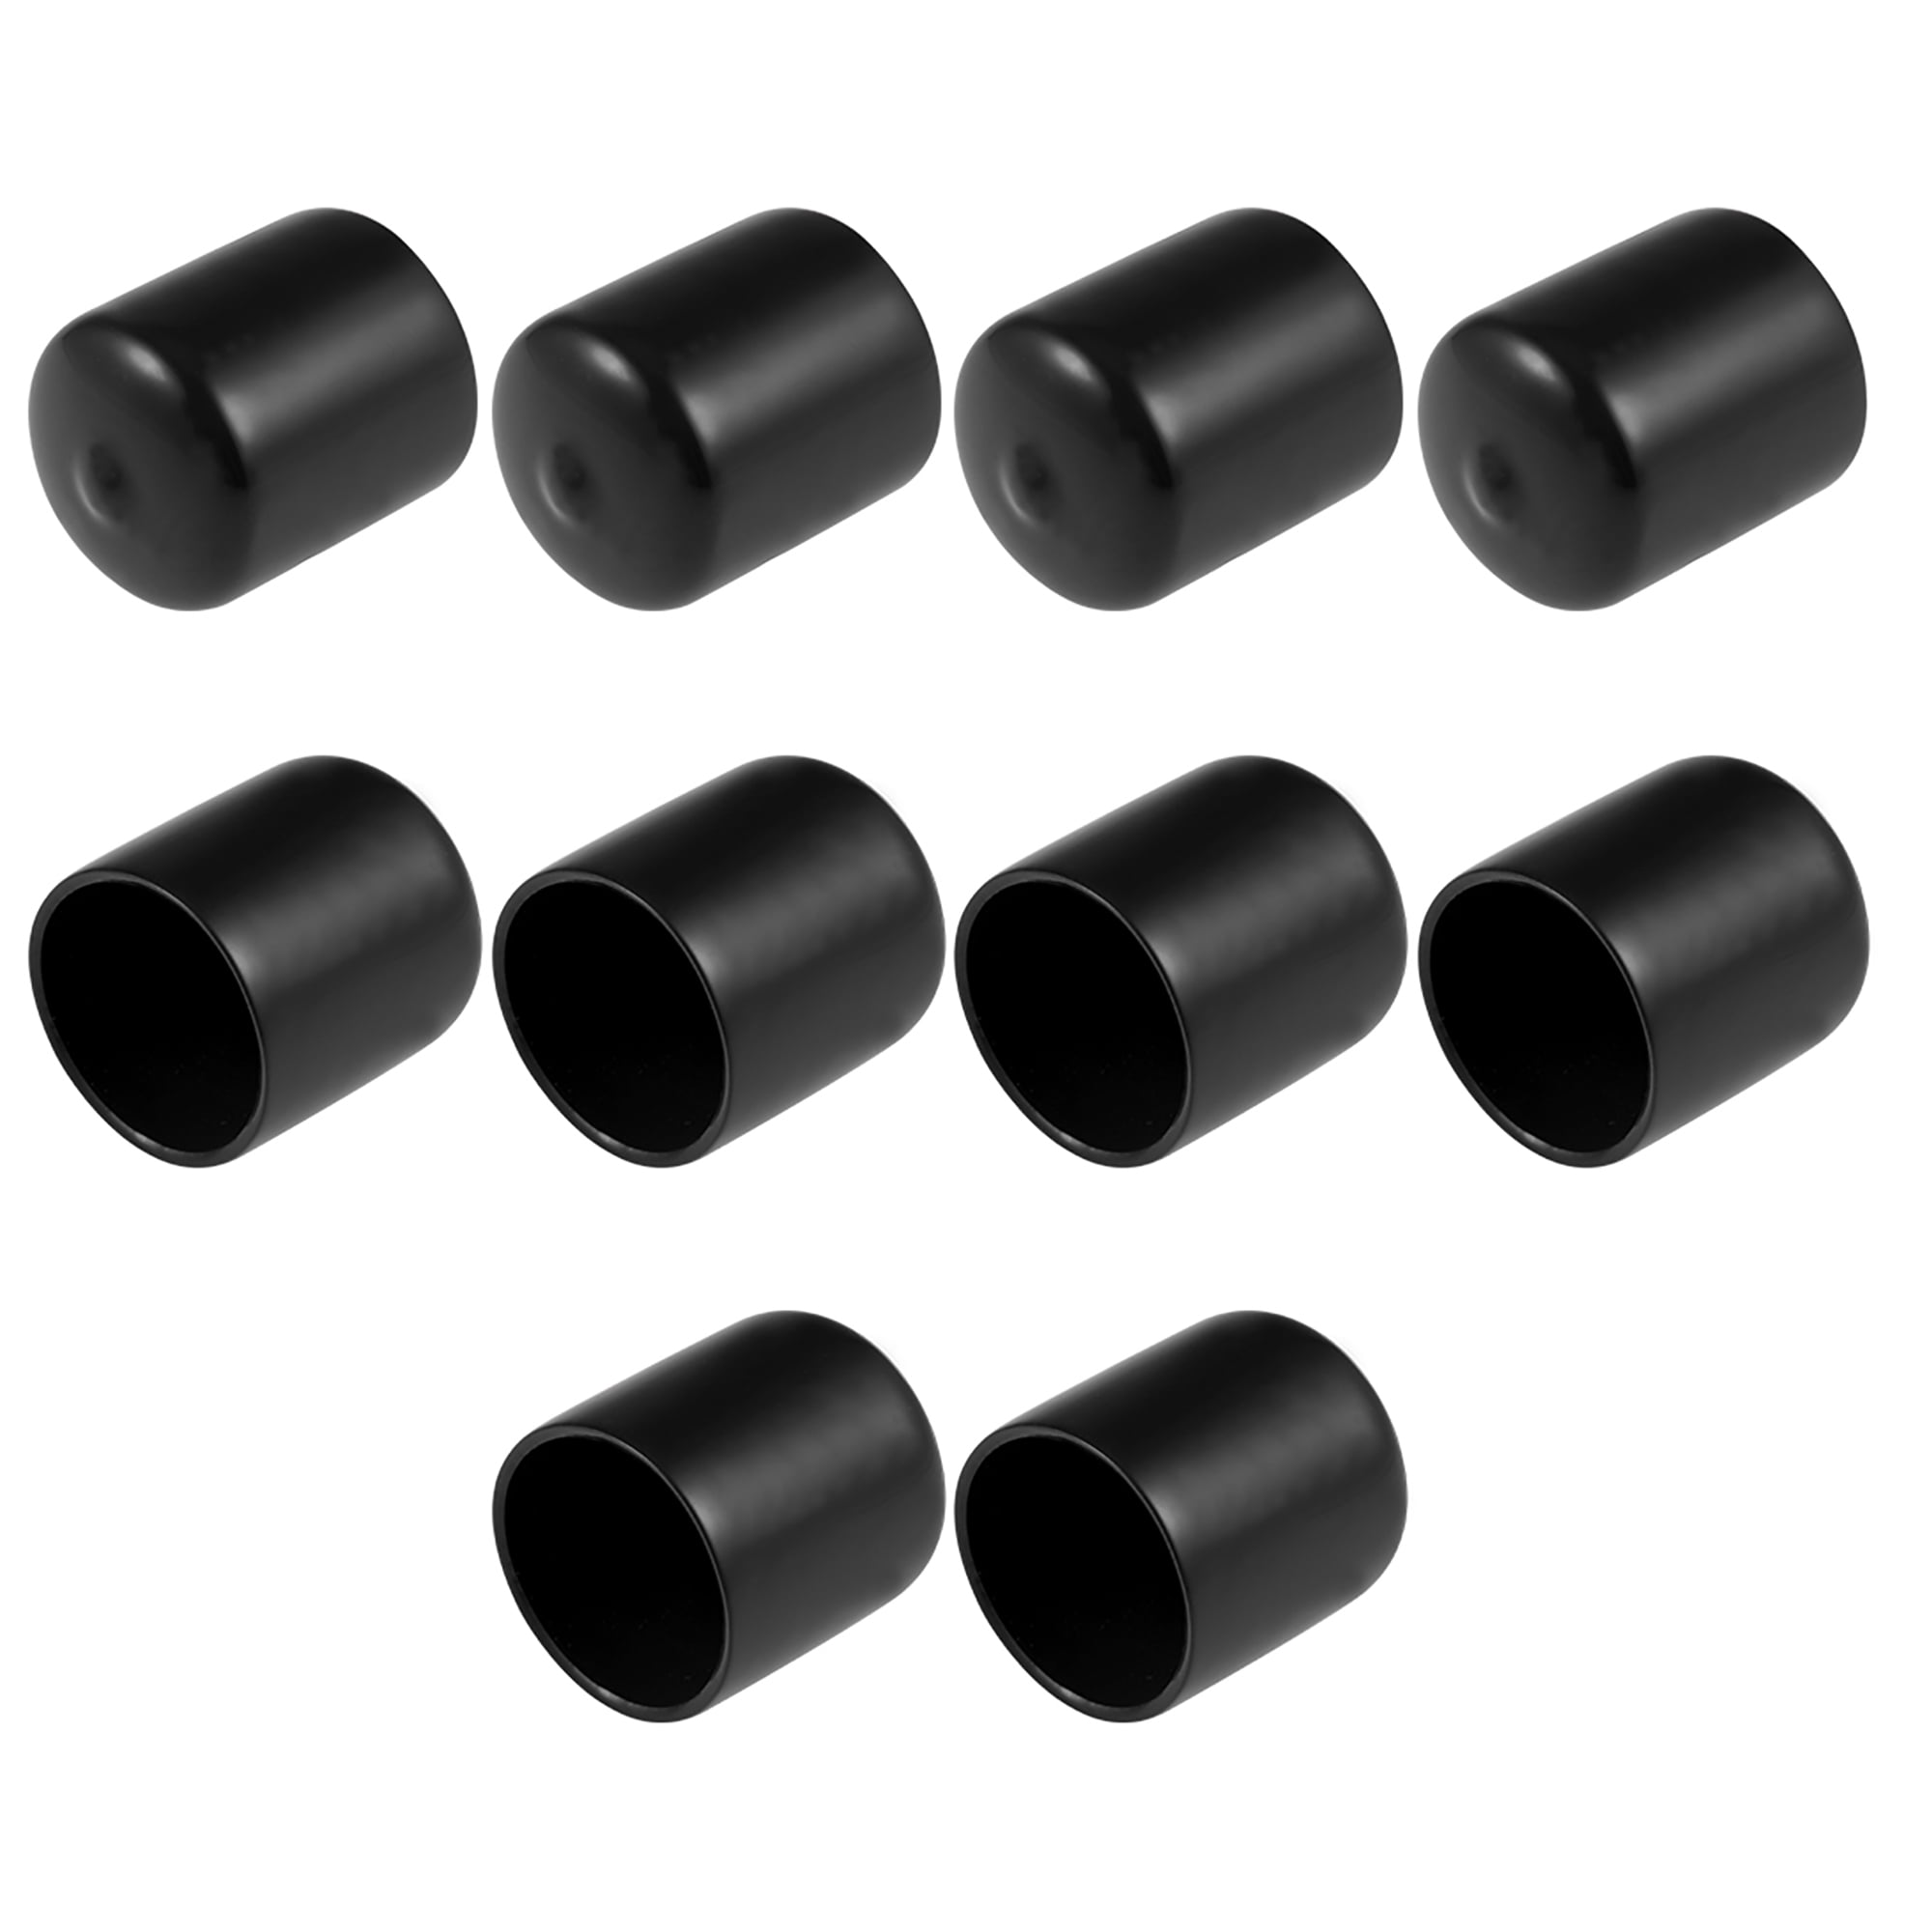 TEHAUX 700pcs Rubber End Caps Round Thread Protector Flexible Black Vinyl End Caps for Furniture Pipes Hoses Screws